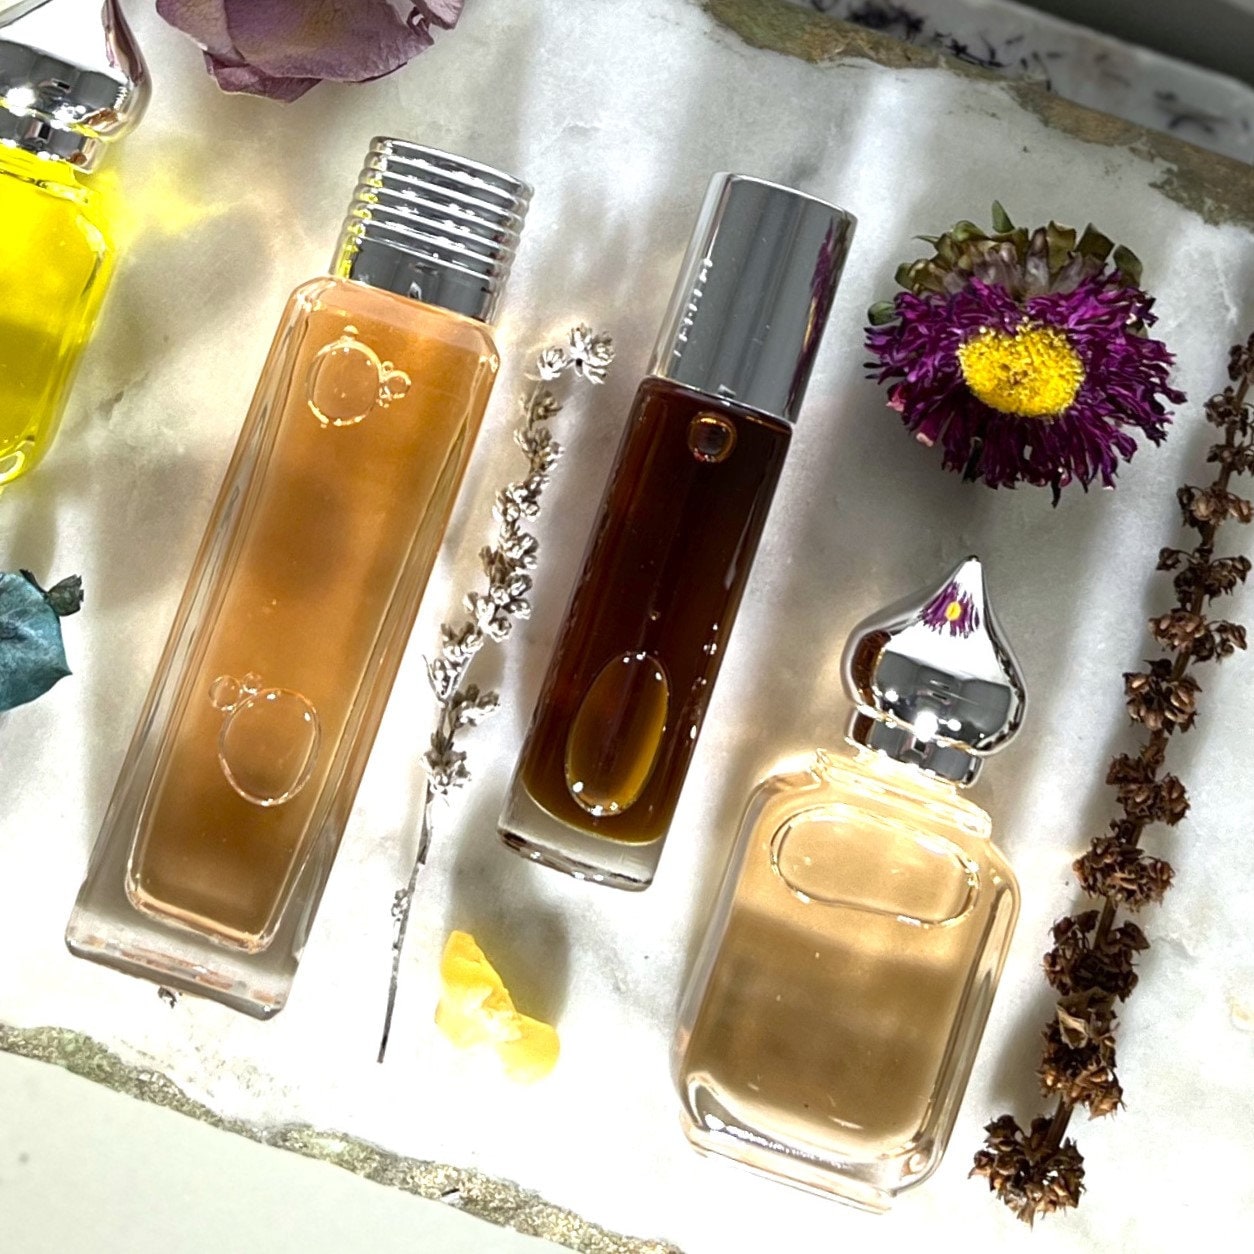 Chanel #5 - Fragrance Oil (wholesale)